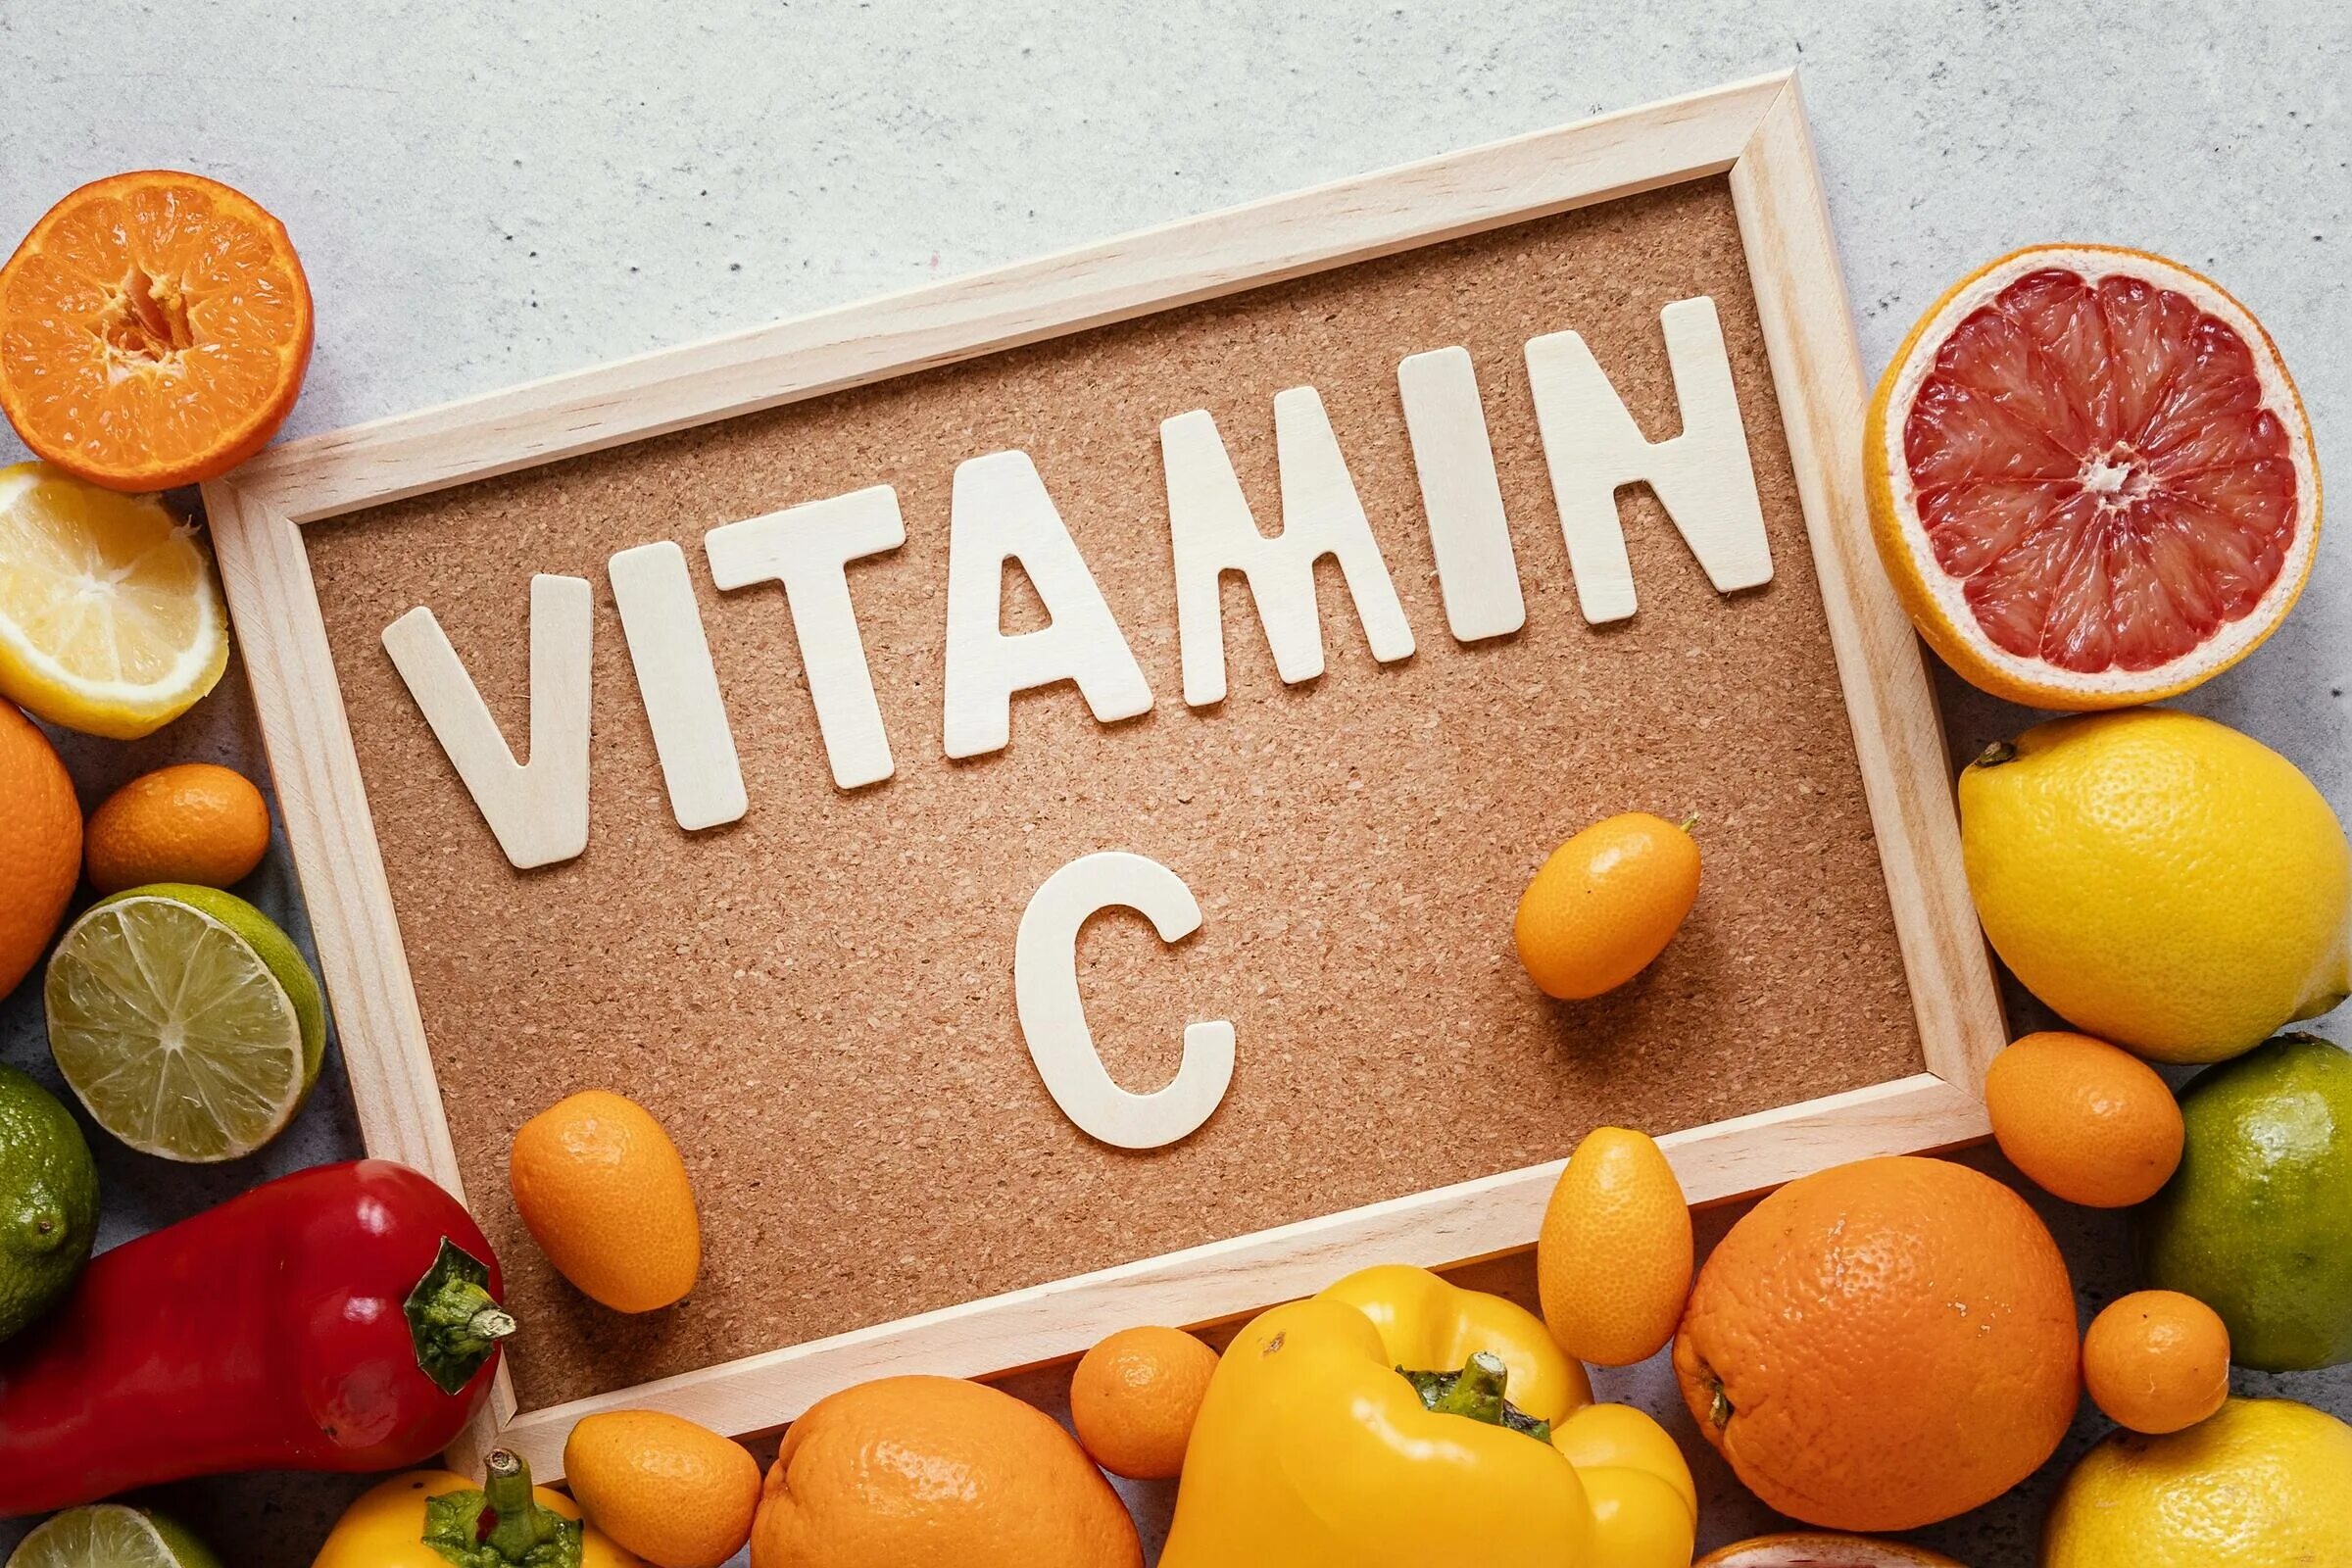 Much vitamins. Витамины картинки. Что такое витамины. Витамины в продуктах картинки для детей. Витамины и минералы картинки.